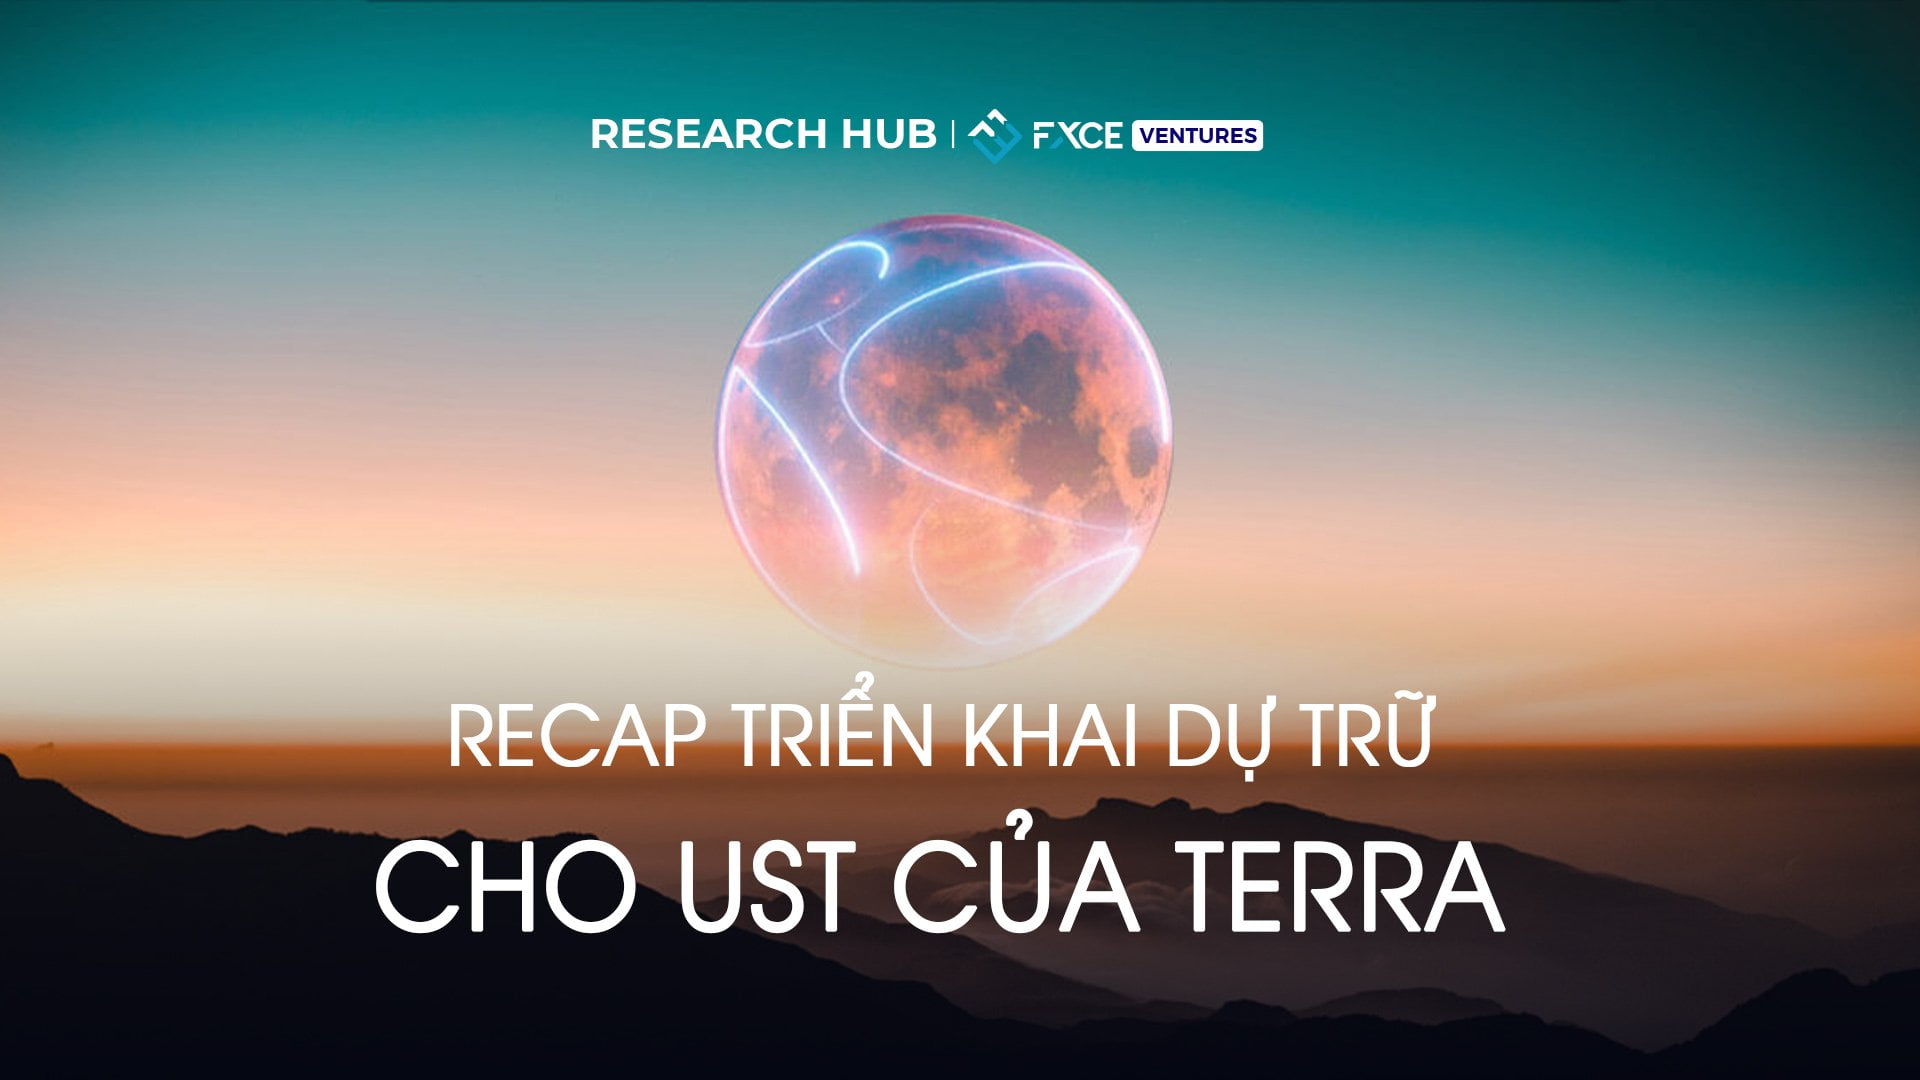 Recap triển khai dự trữ UST của Terra